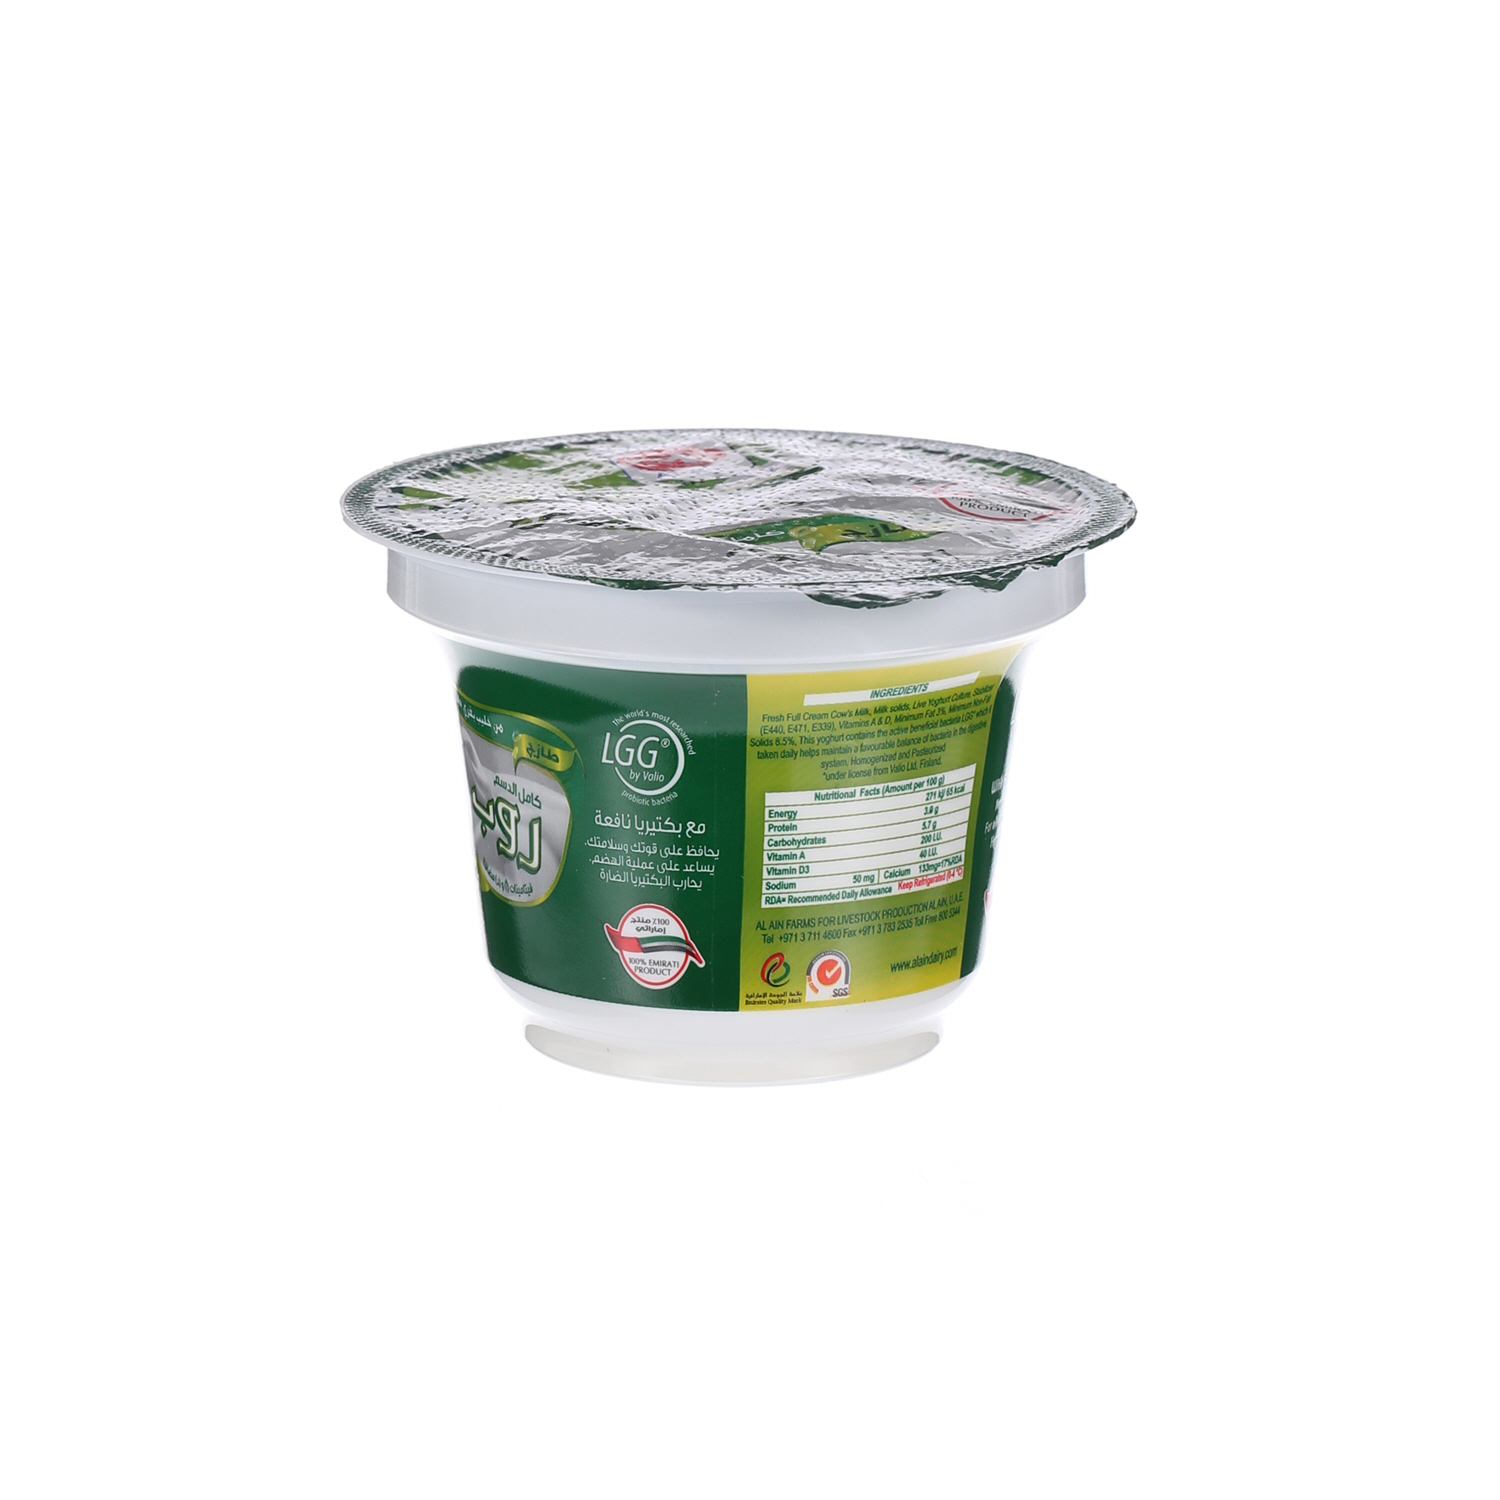 Al Ain Fresh Youghurt Full Cream 170gm